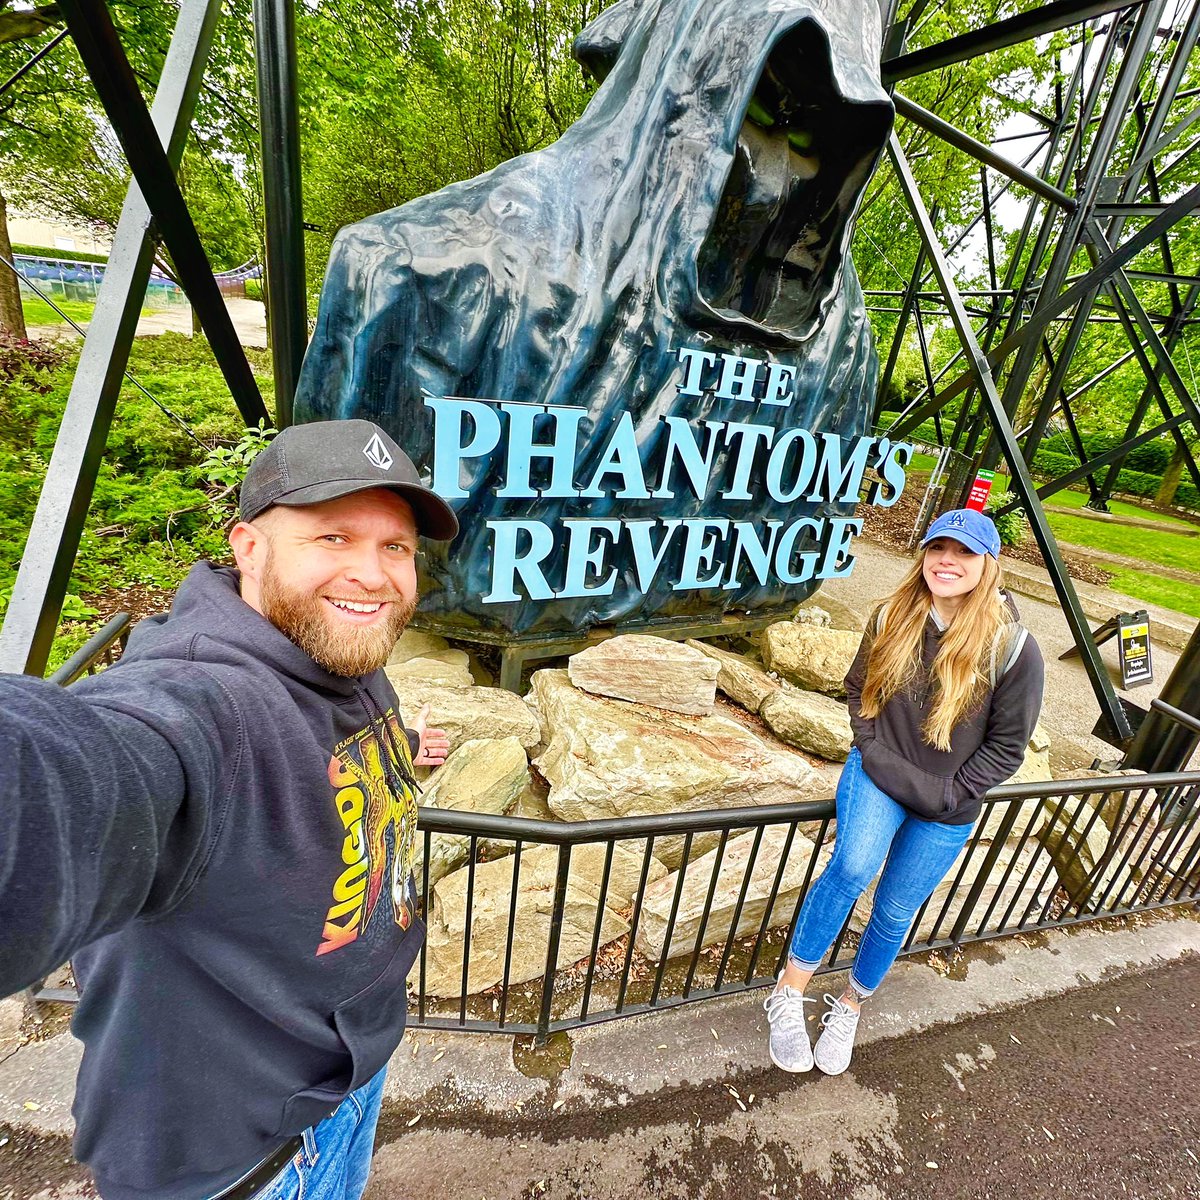 Had a fun day at Kennywood! 

#kennywood #phantomsrevenge #pittsburgh #steelcurtain #themepark #rollercoaster #amusementpark #coasterenthusiast #photography